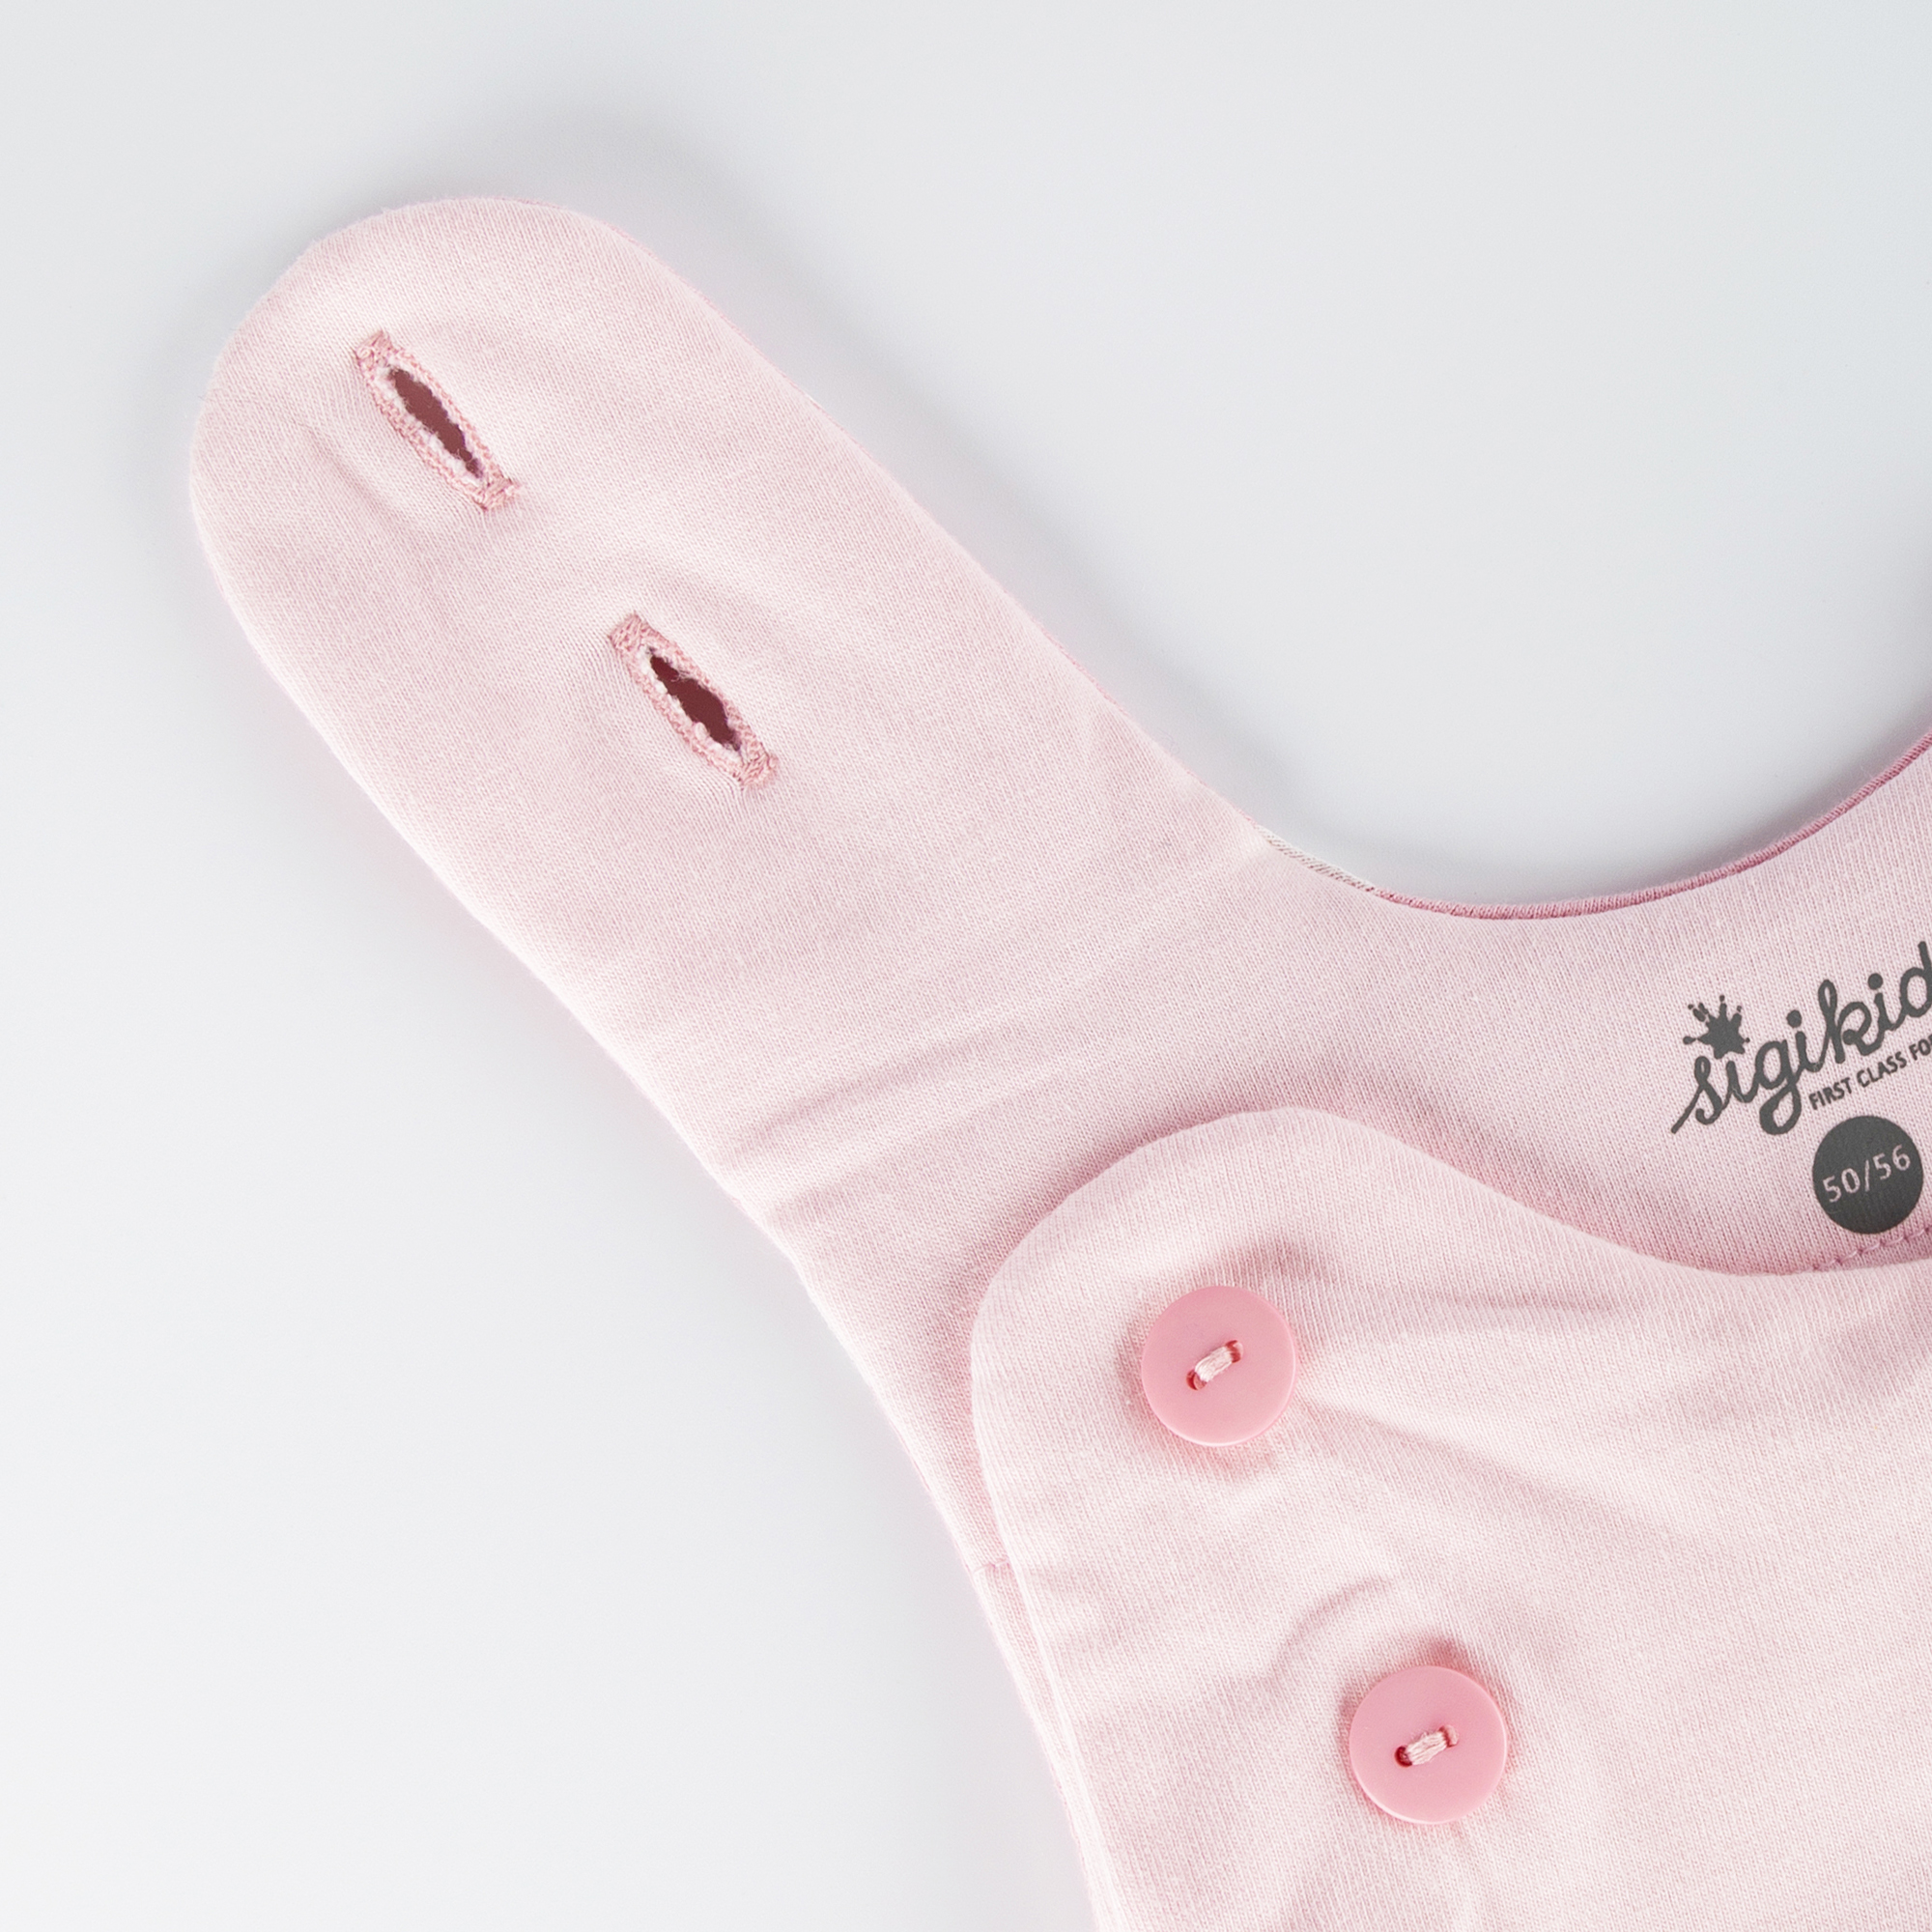 Newborn baby padded sleeping bag bear, pink